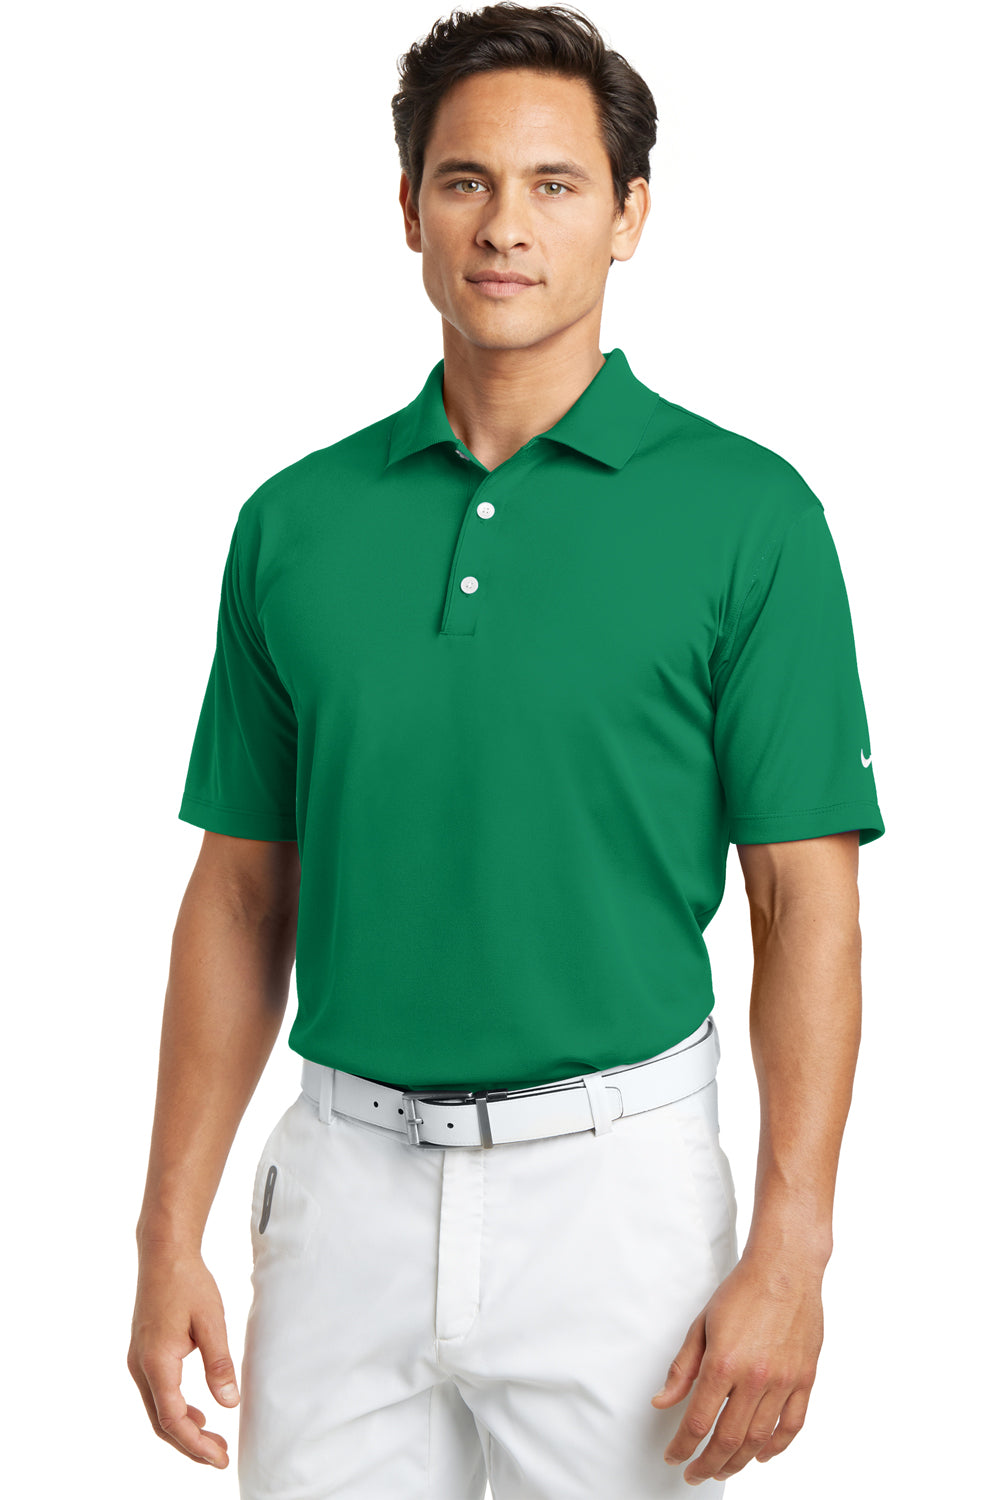 Nike 203690 Mens Tech Basic Dri-Fit Moisture Wicking Short Sleeve Polo Shirt Lucky Green Model Front